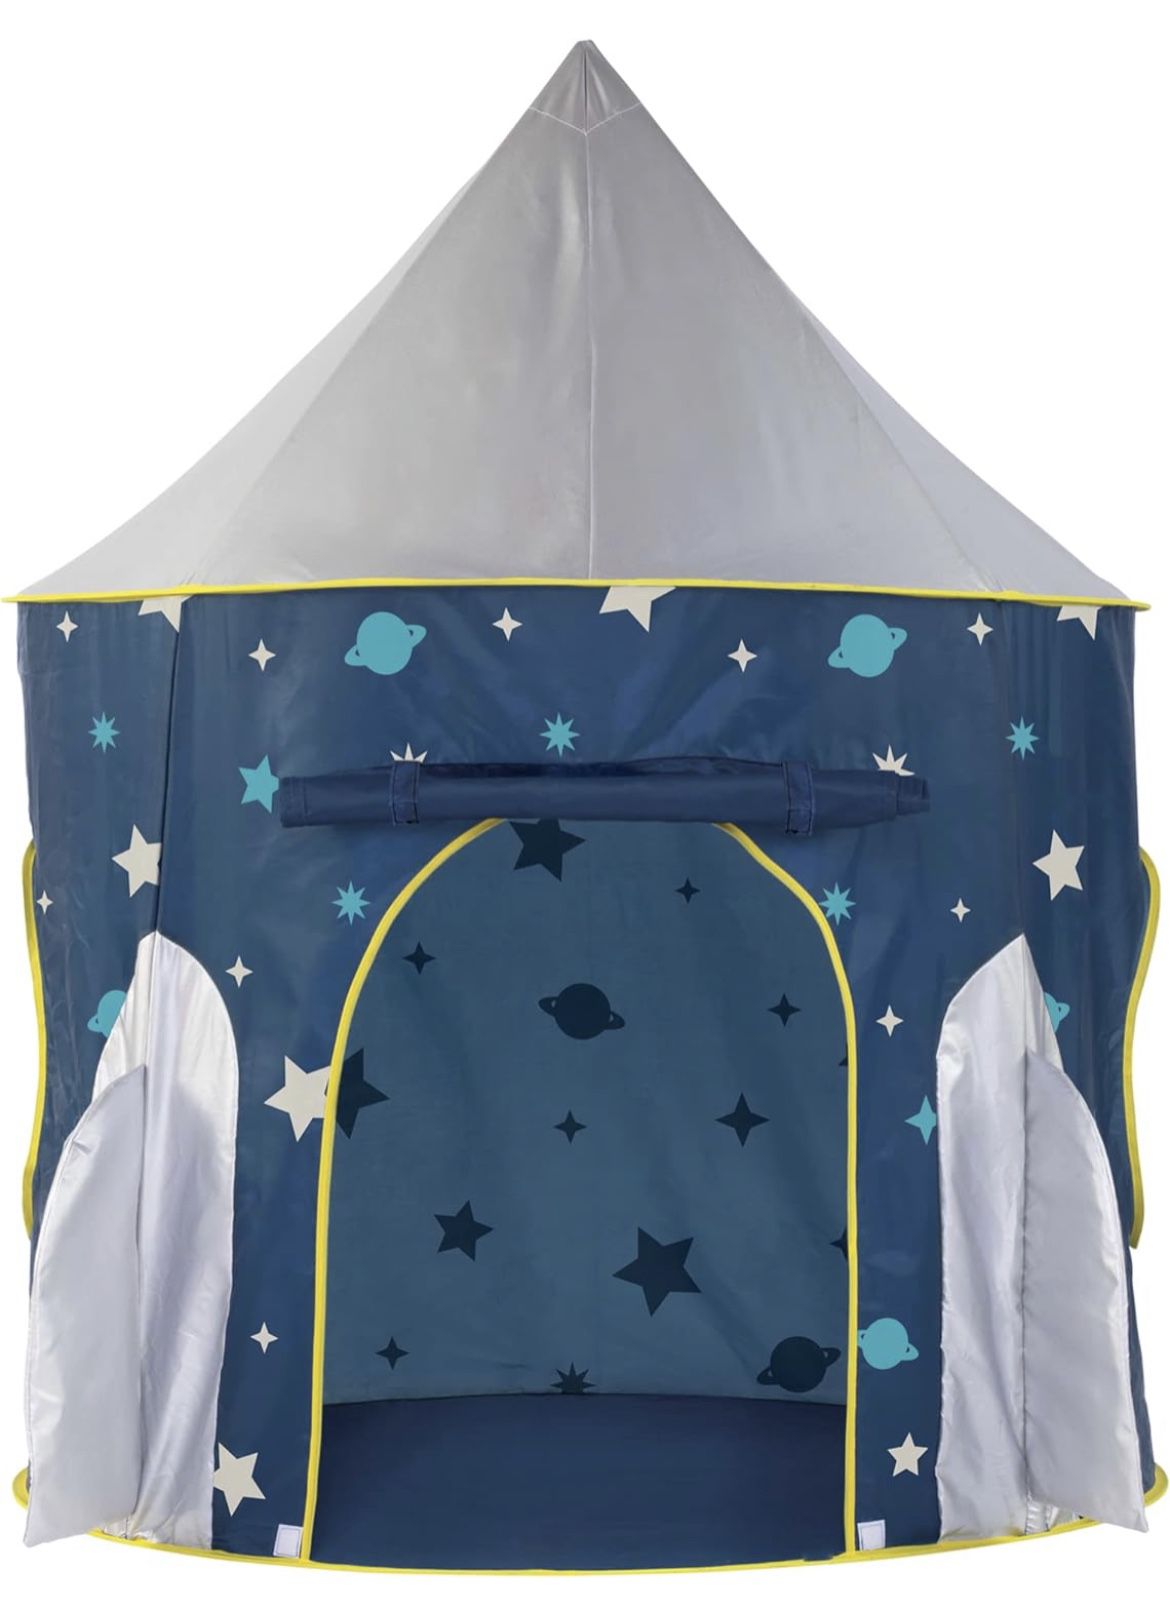  Chuckle & Roar Spaceship Play Tent Active Play Toddlers Preschool pop up#4388